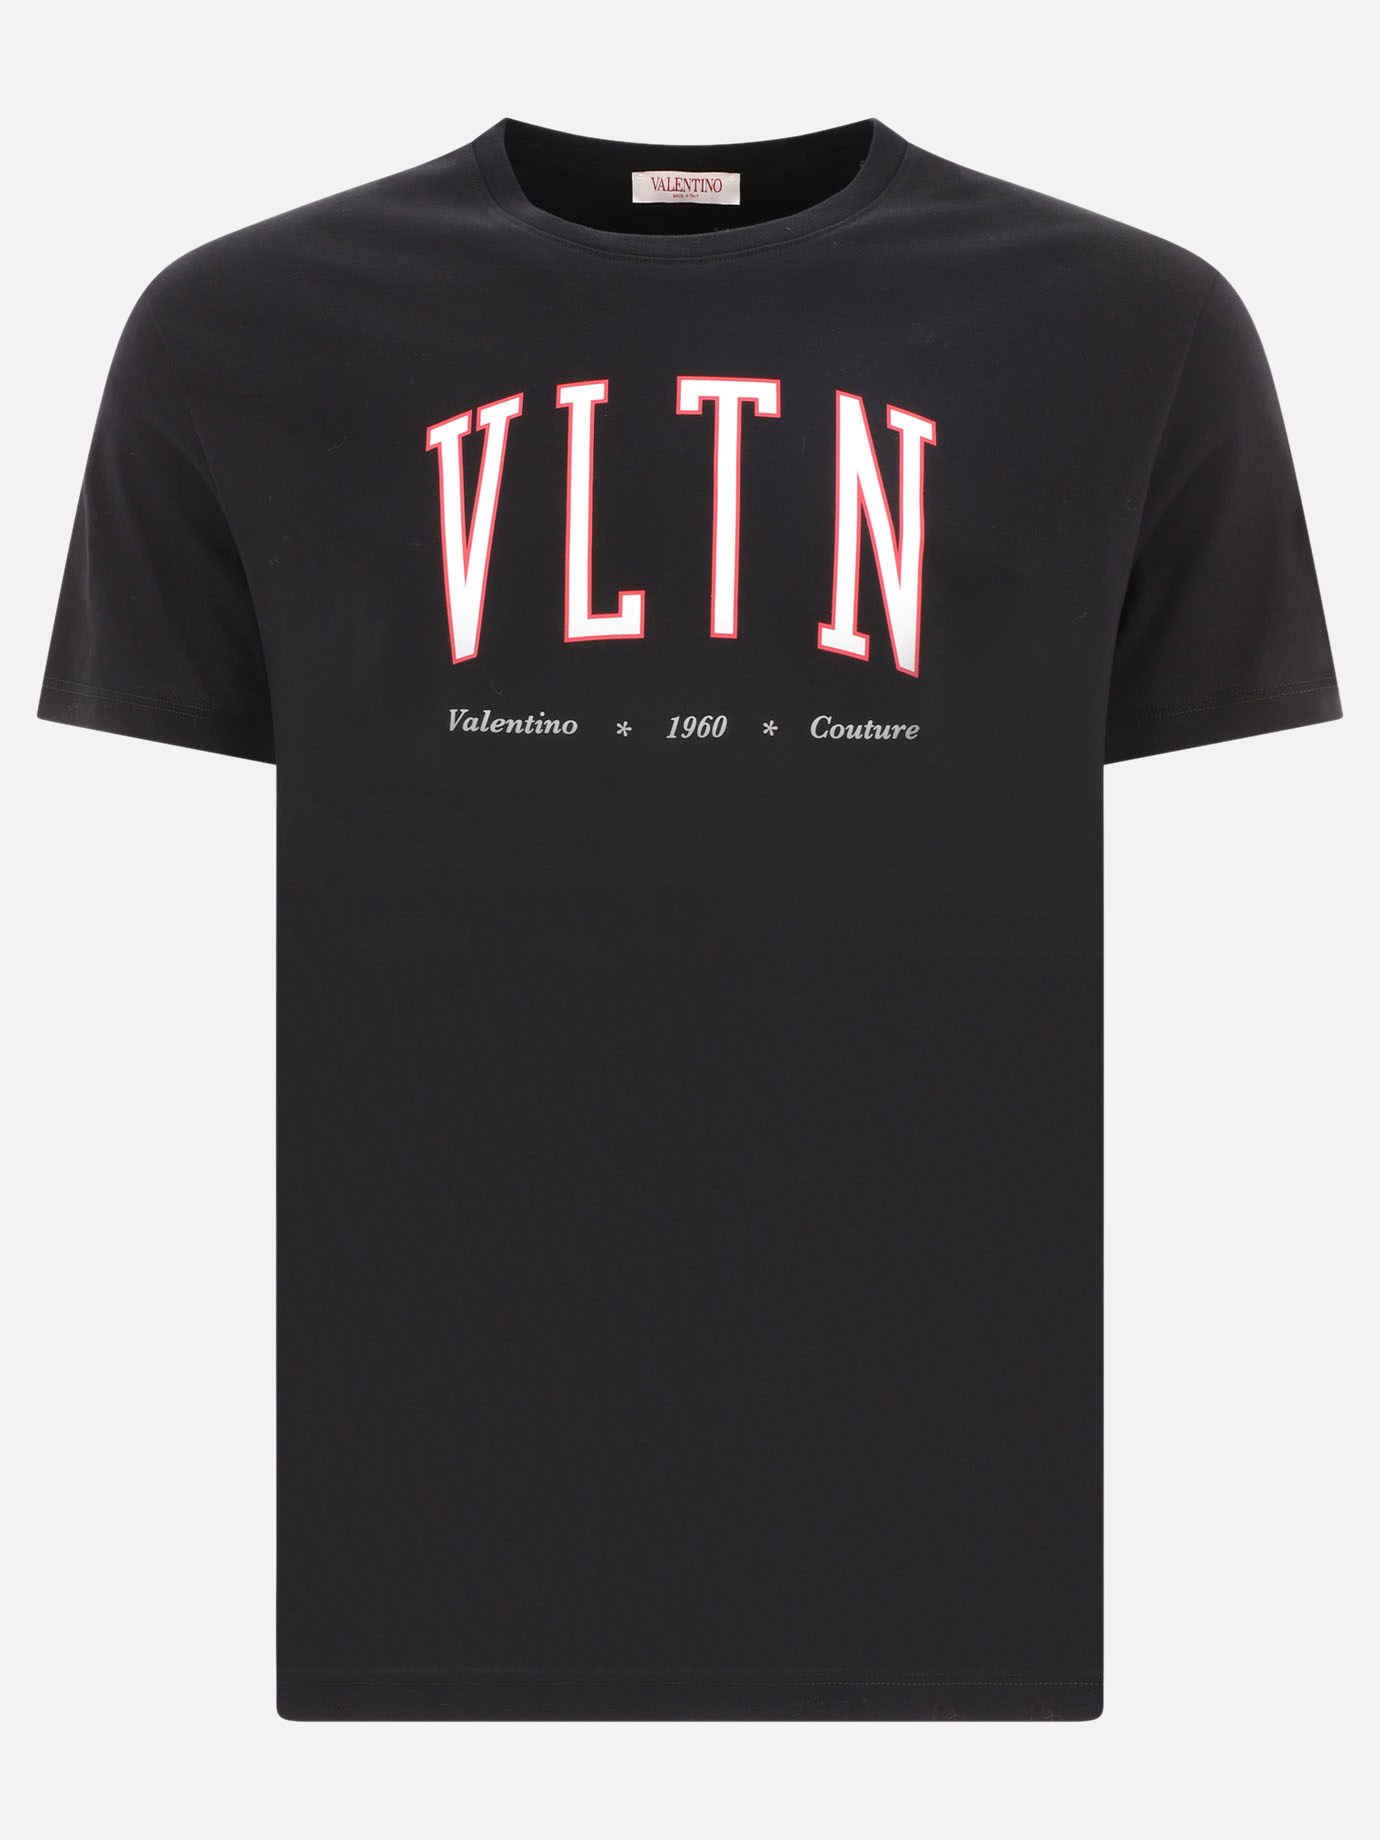 T-shirt  VLTN by Valentino - 4